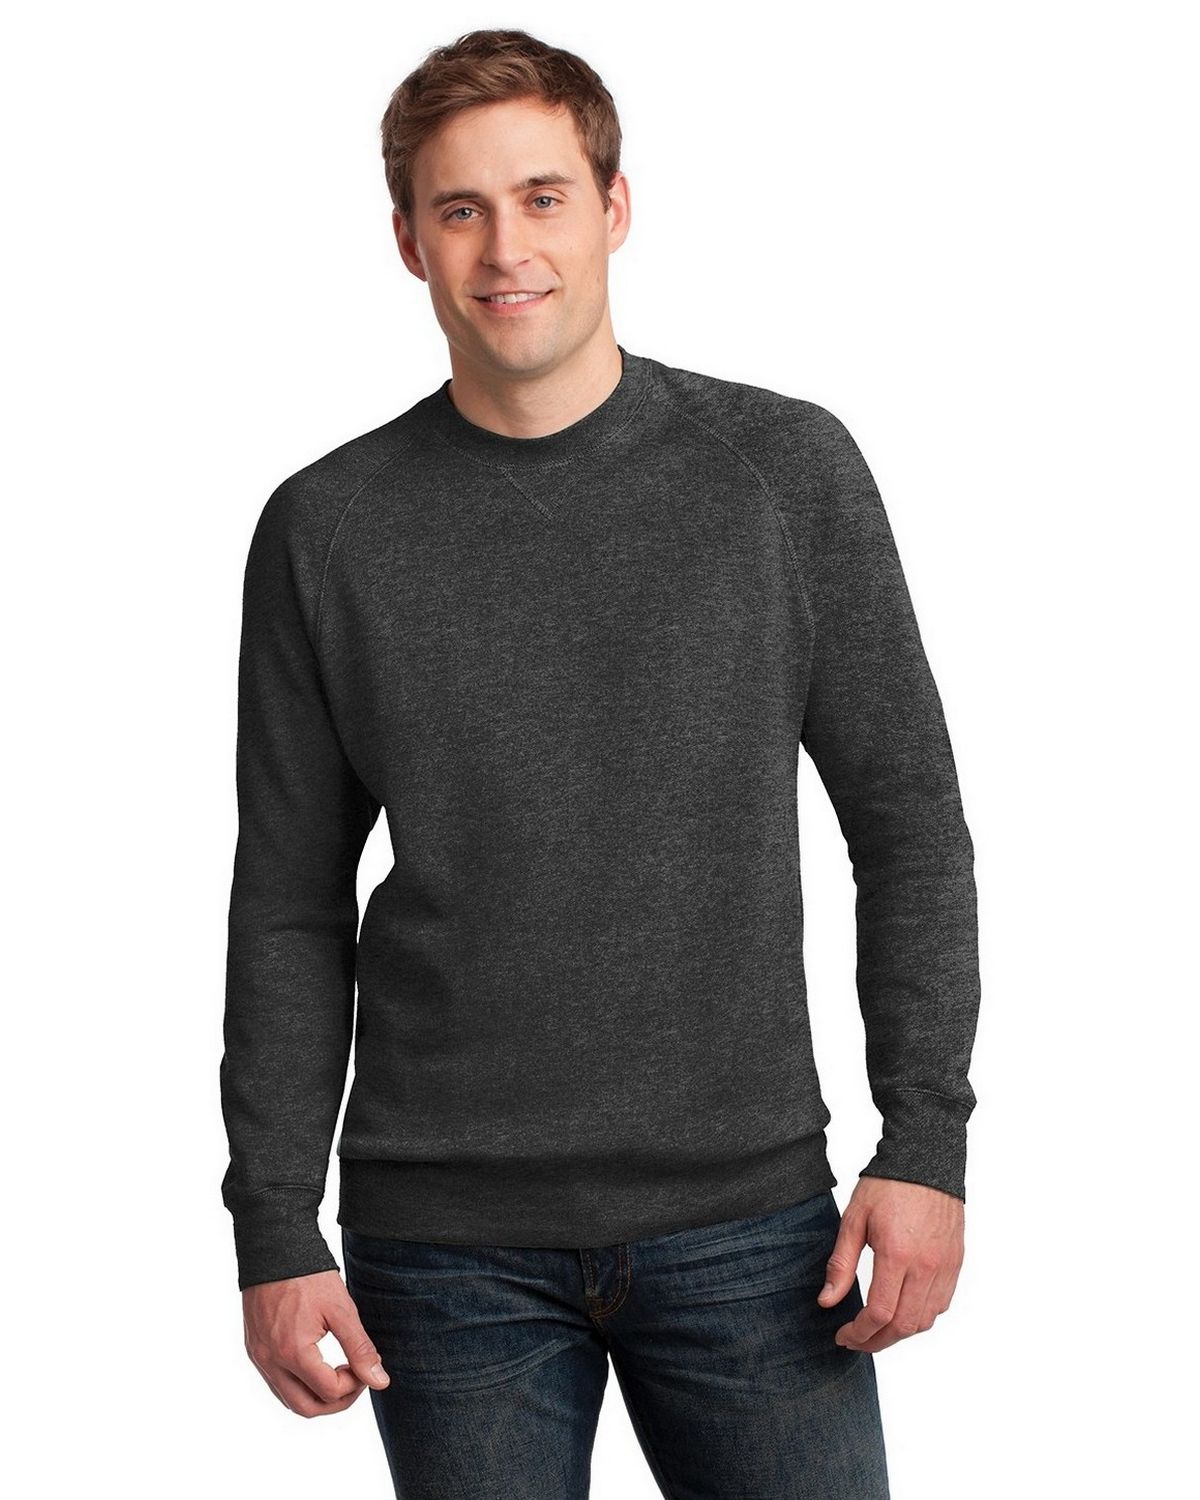 Hanes HN260 Nano Crewneck Sweatshirt for Business Uniforms